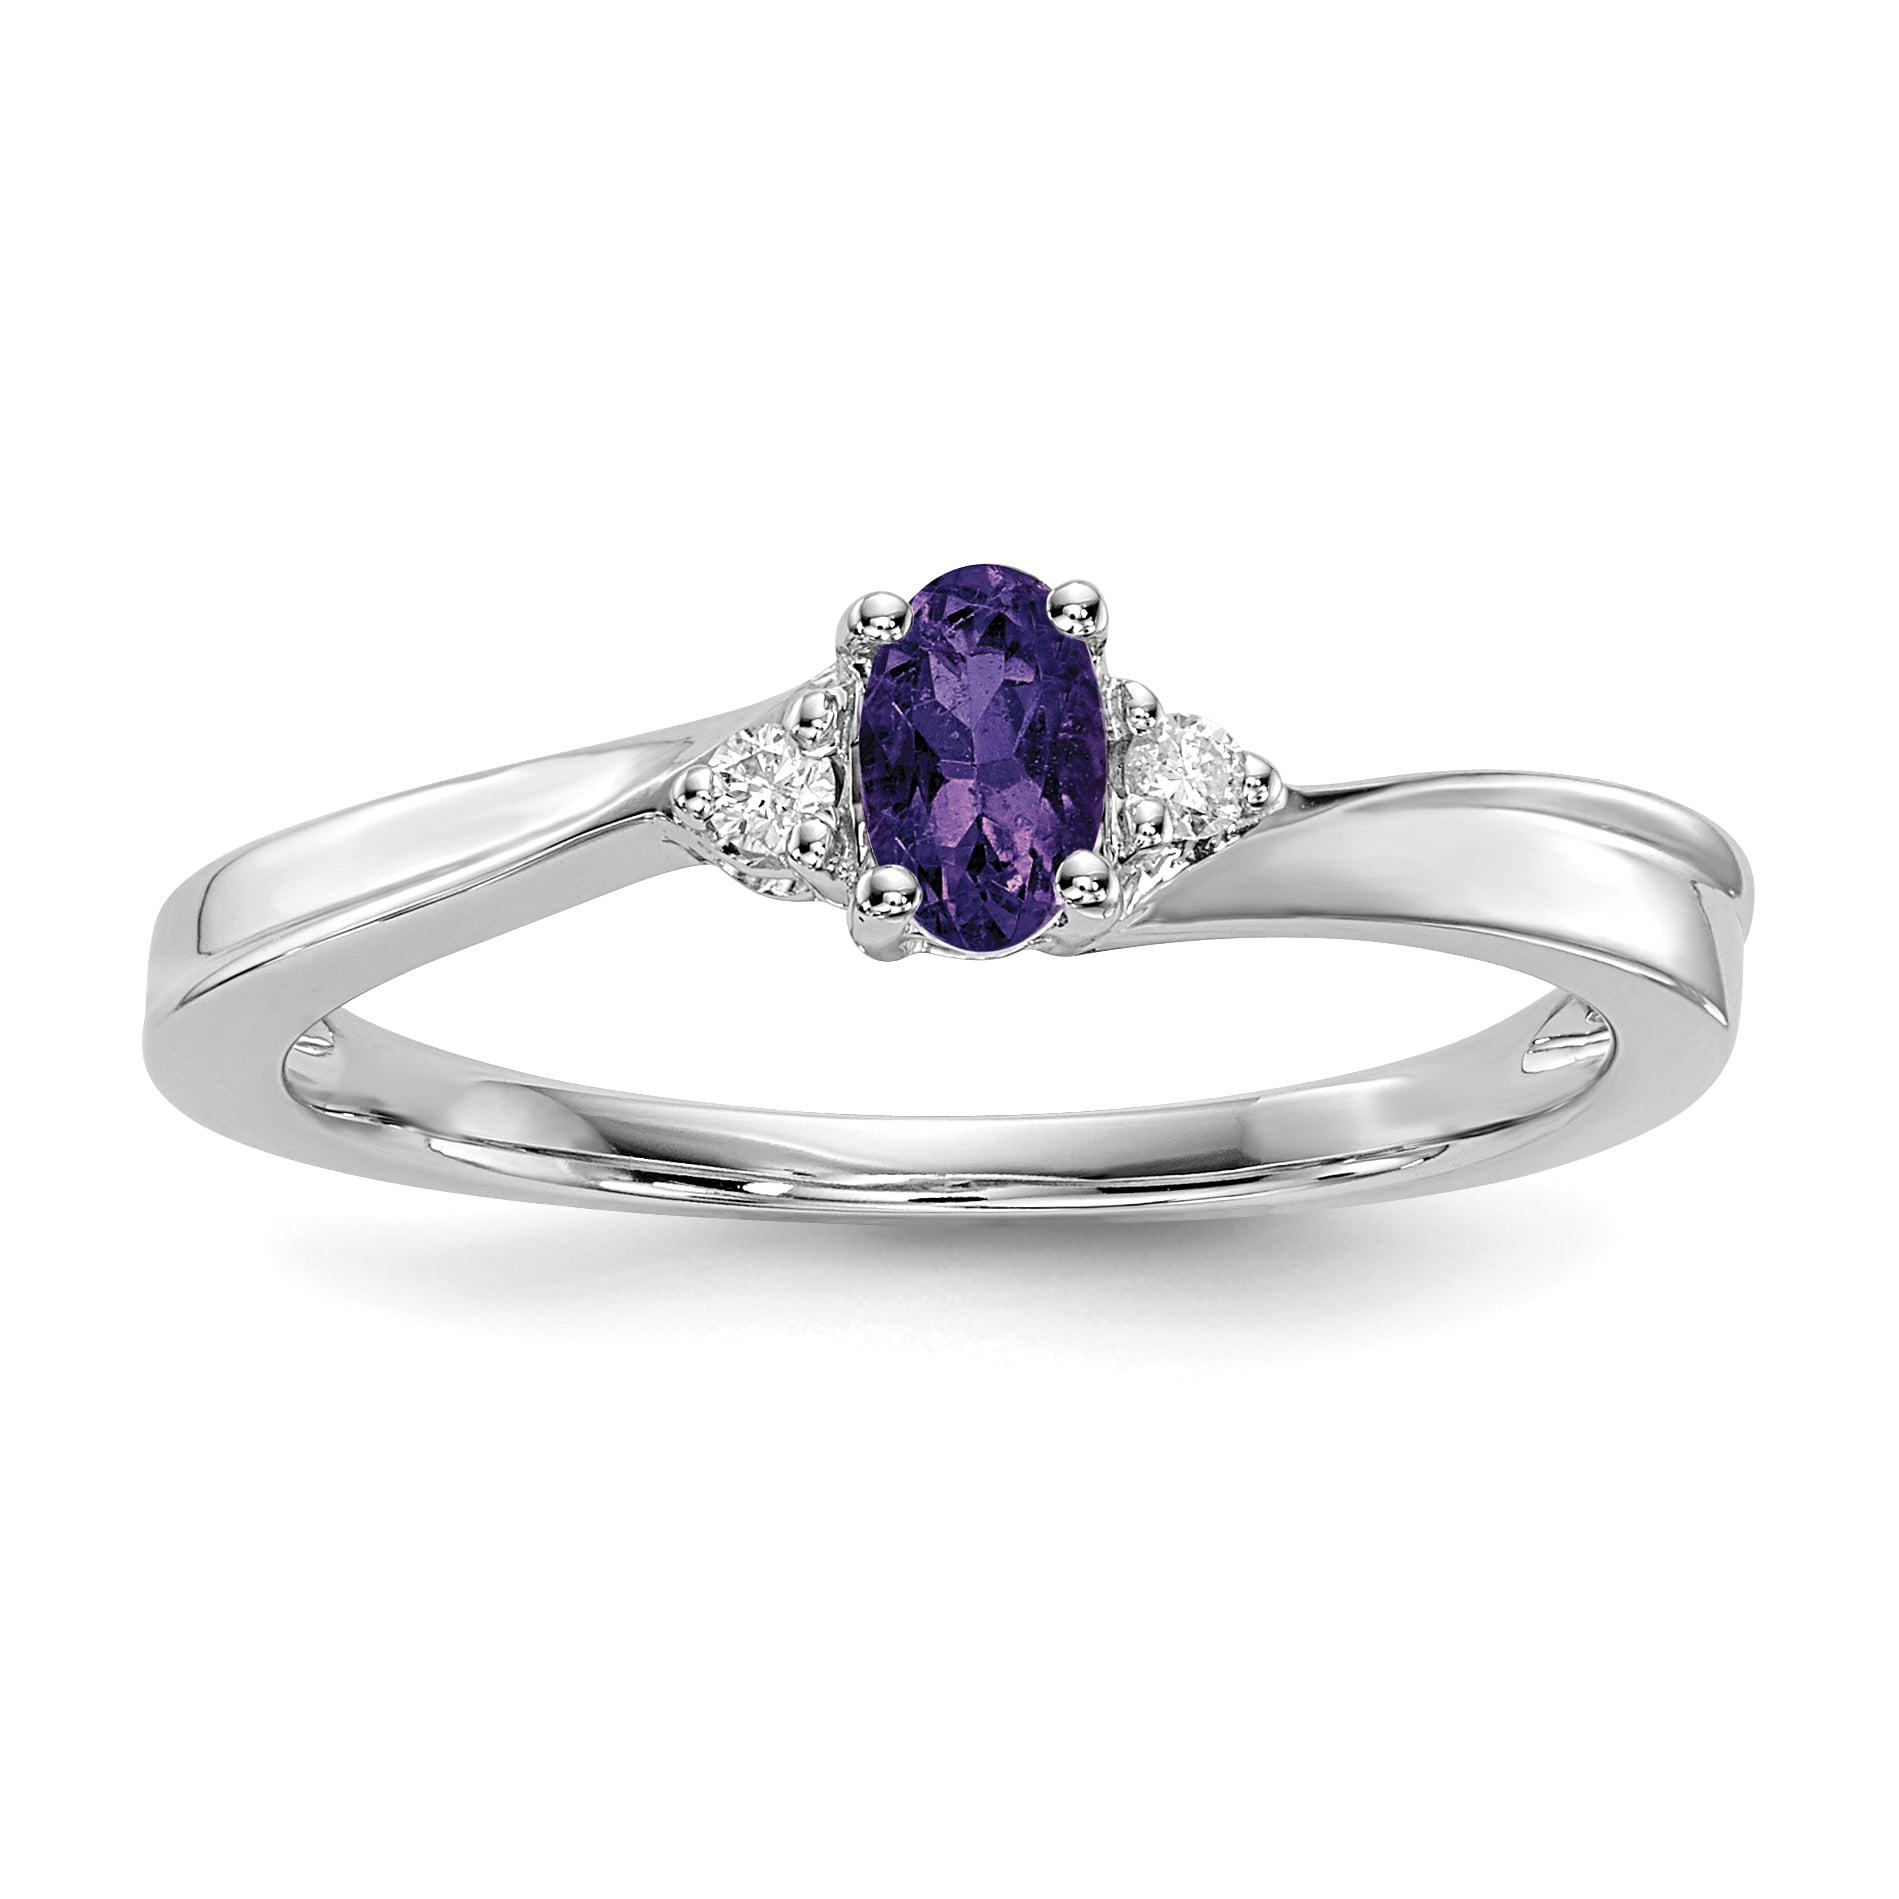 Gemstone Jewelry Gift Idea for Women Size 9 February Birthstone Amethyst Sterling Silver Ring 